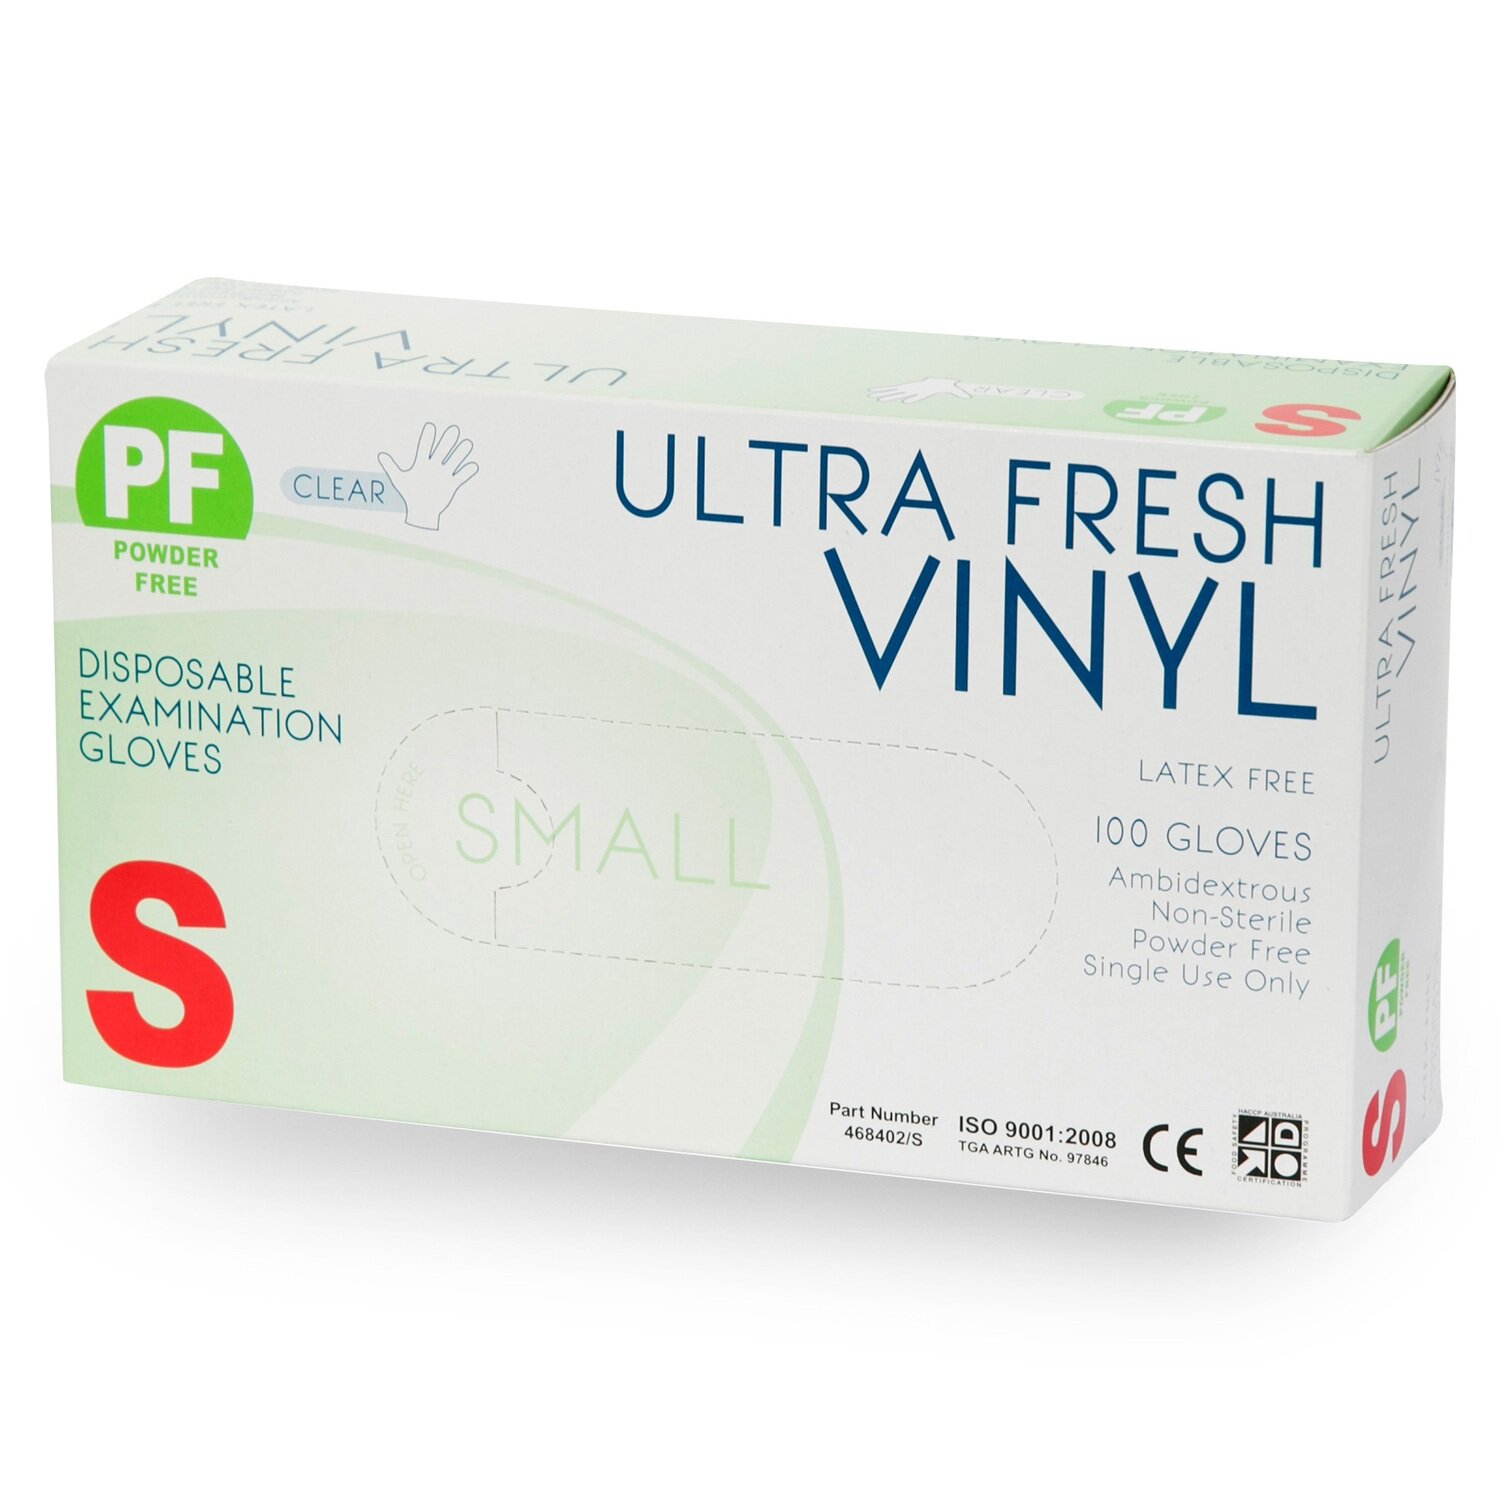 ULTRA FRESH VINYL GLOVES CLEAR PF Premium Weight 100 BOX